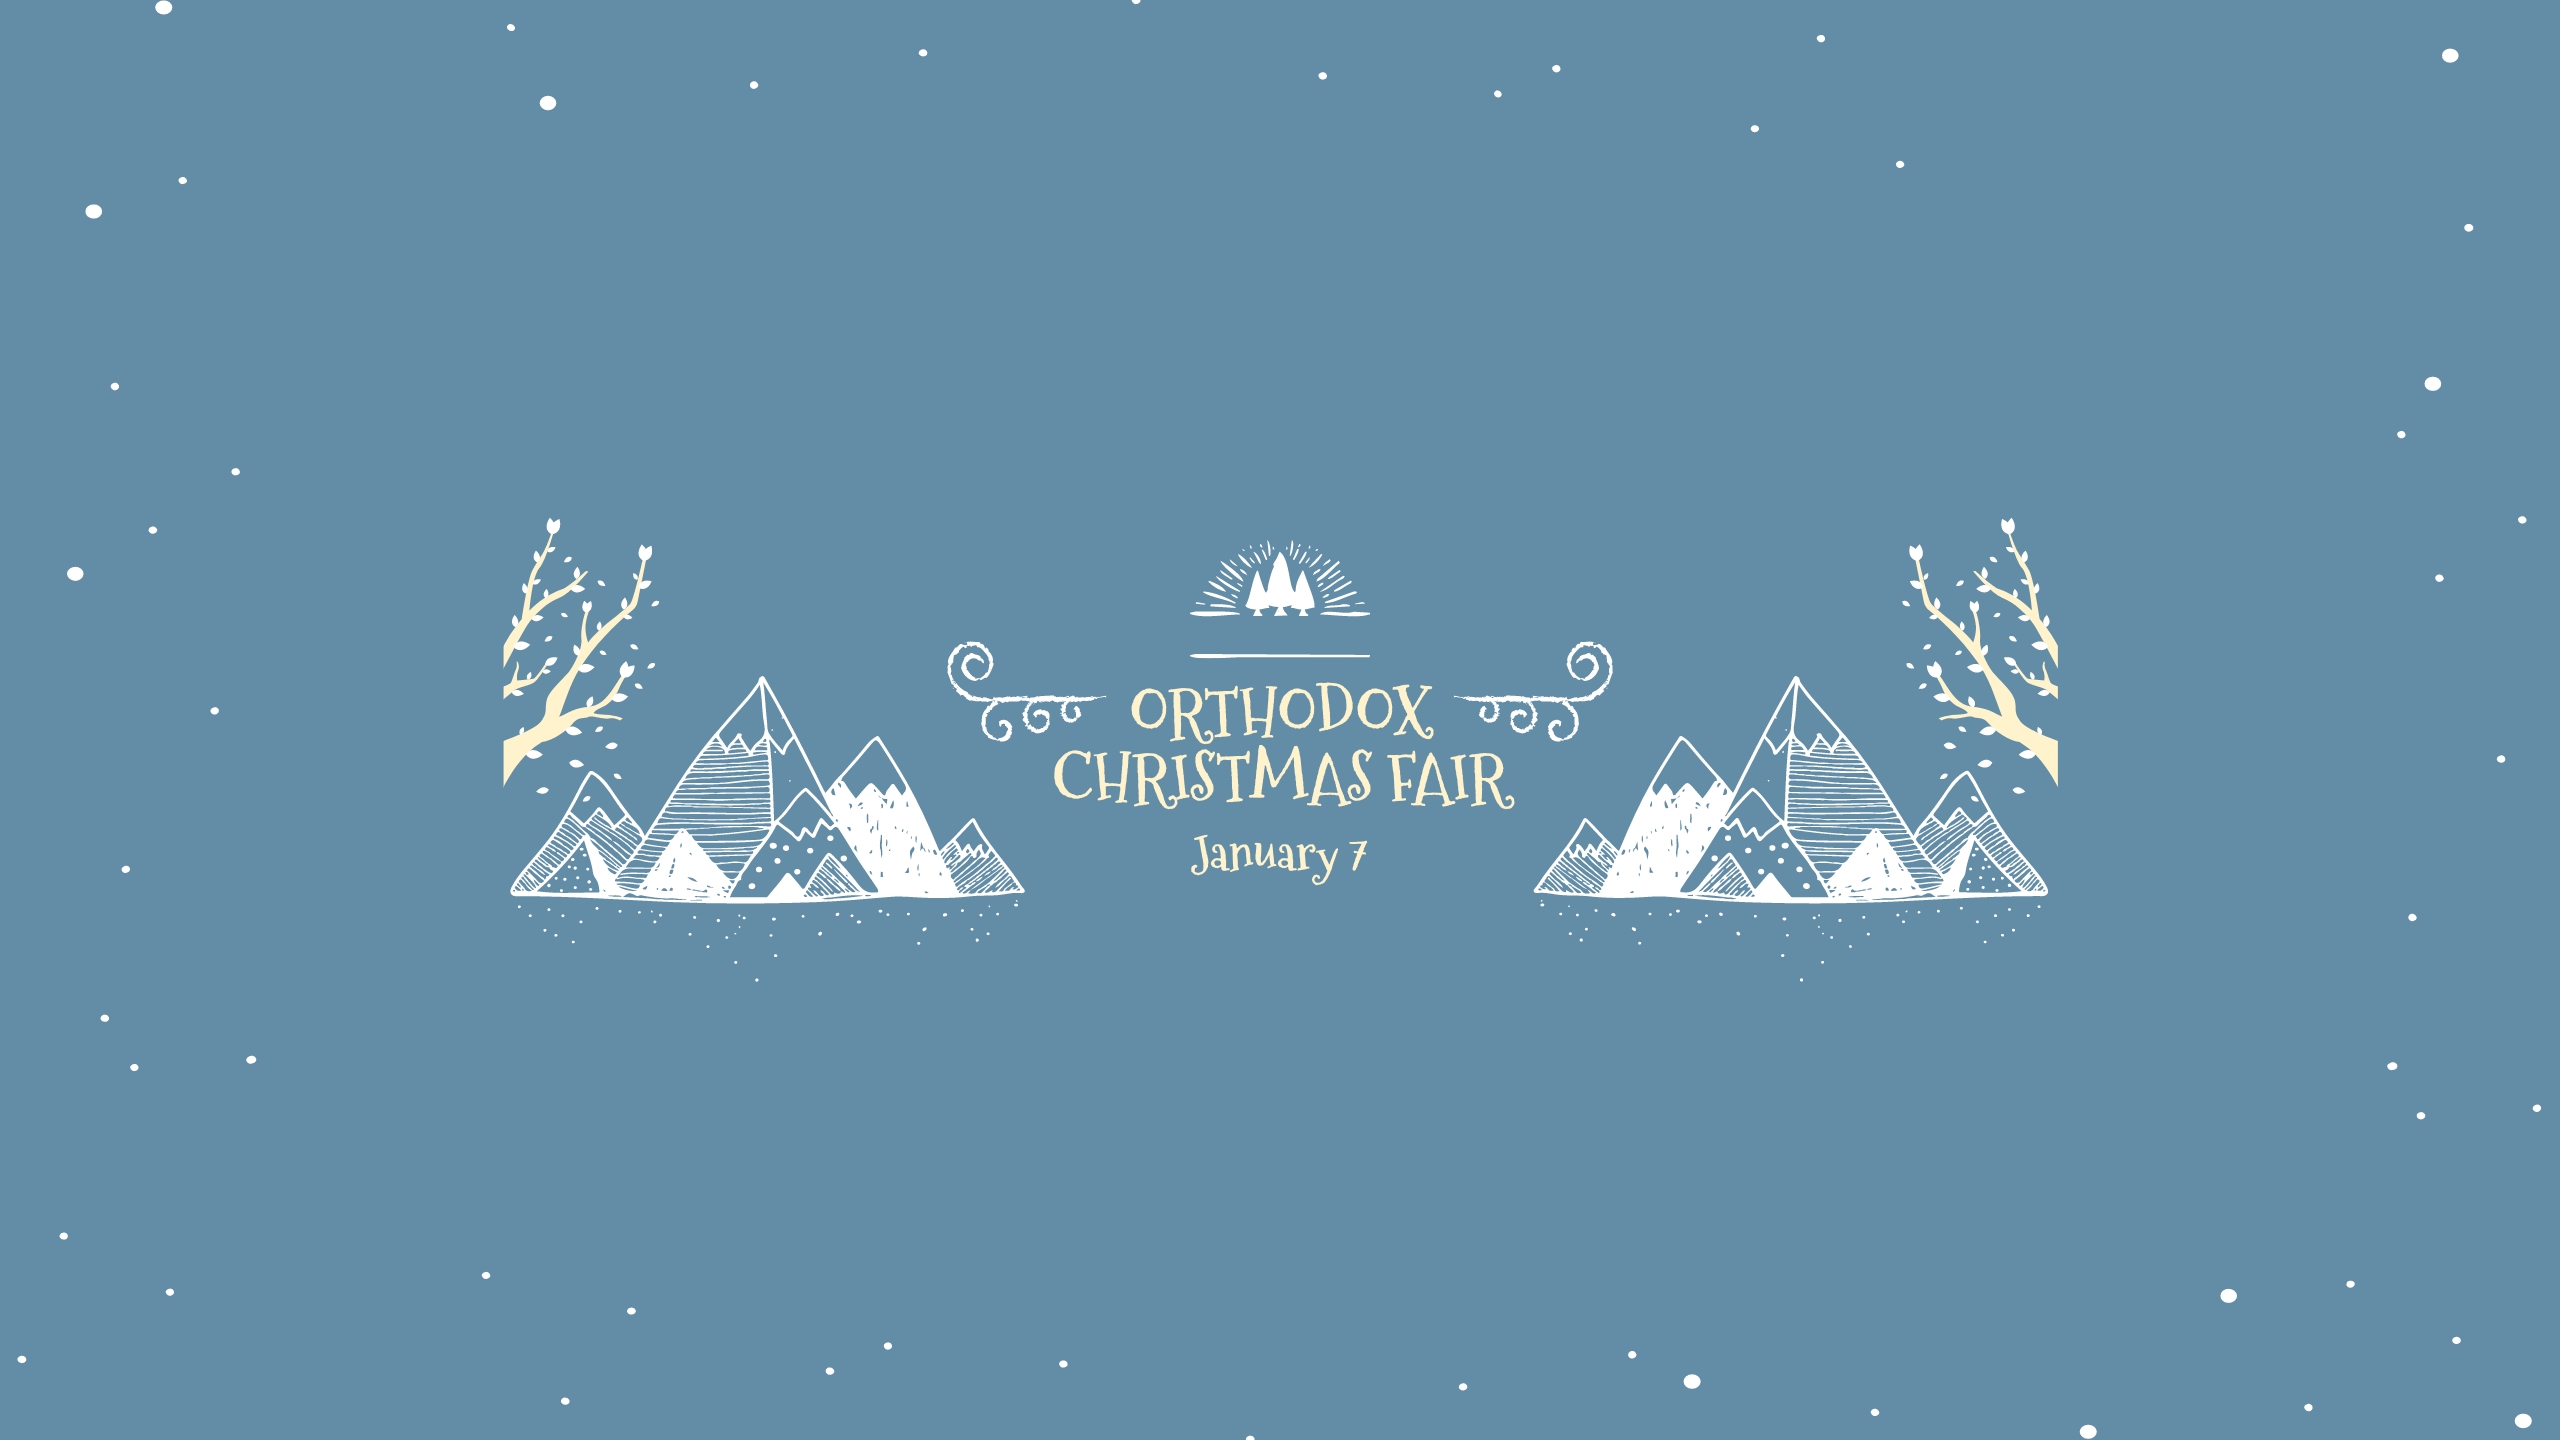 Orthodox Christmas Fair Youtube Banner Template